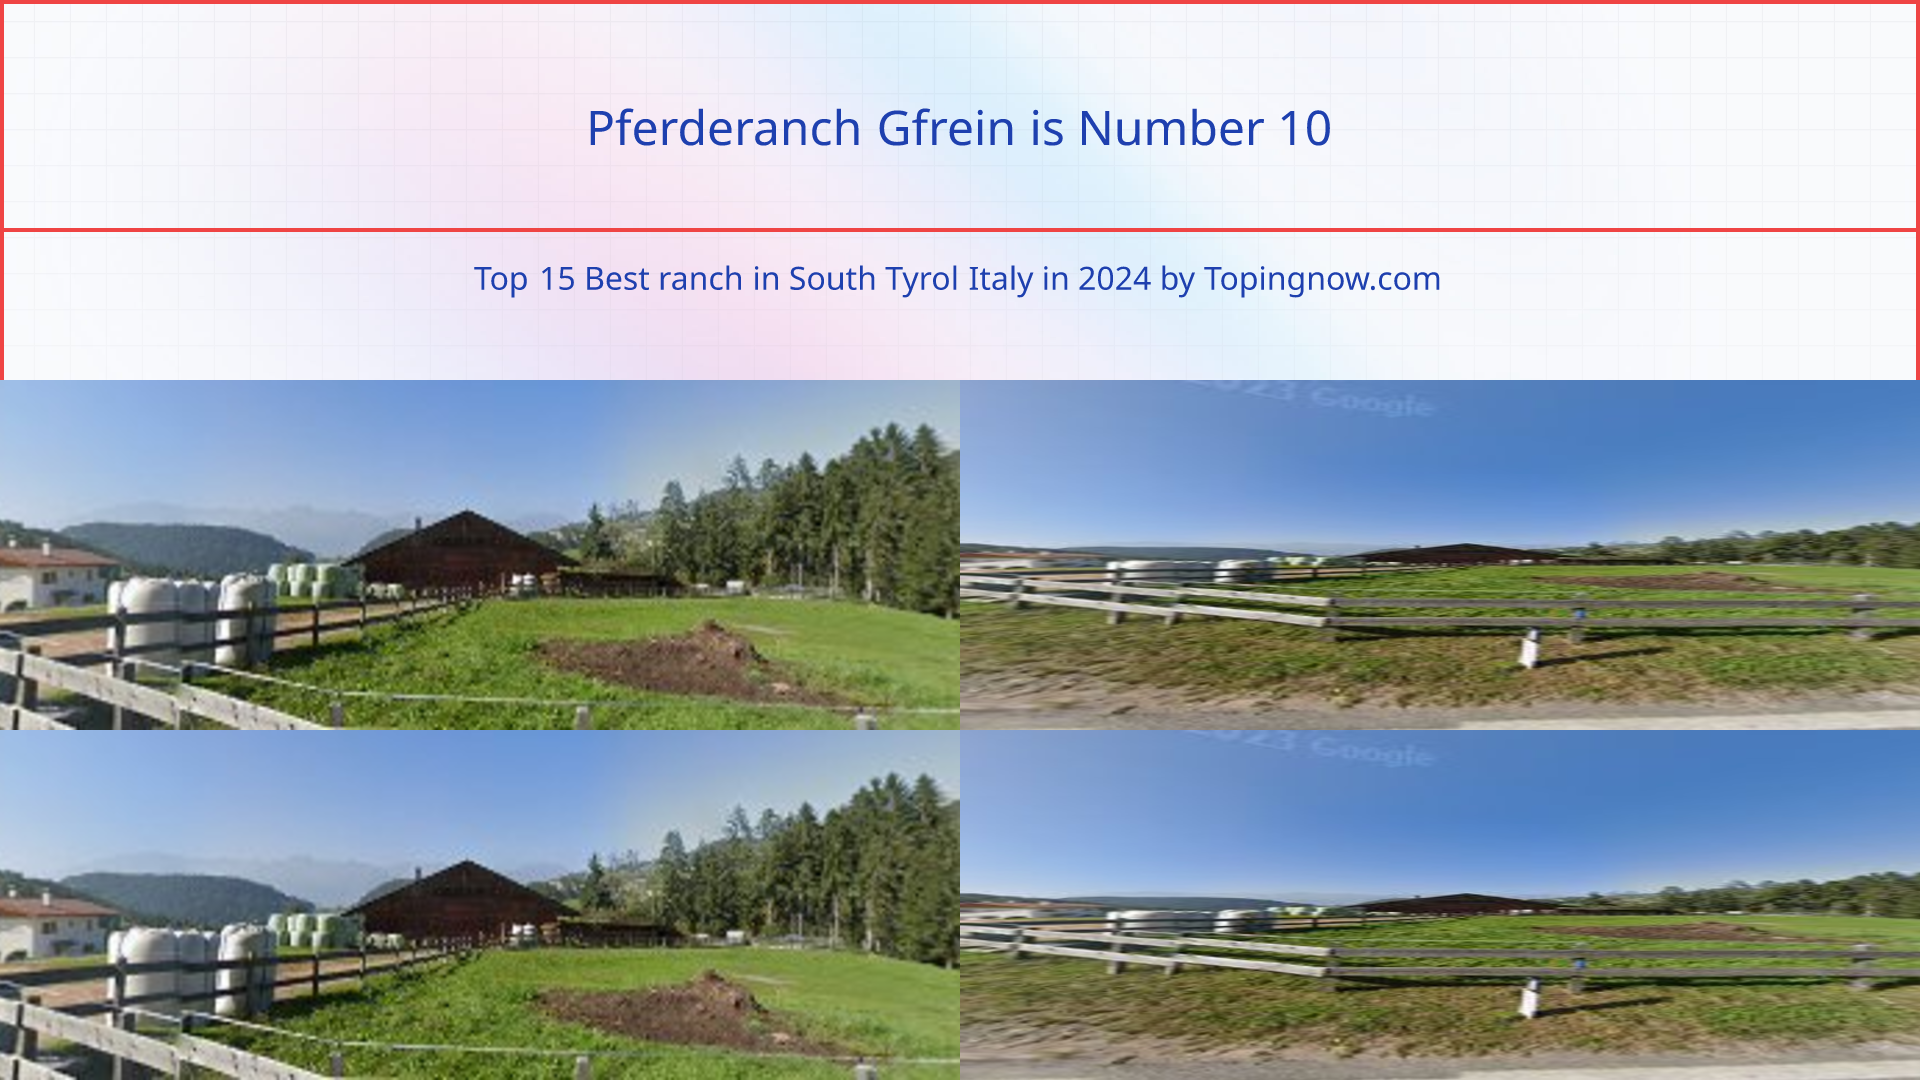 Pferderanch Gfrein: Top 15 Best ranch in South Tyrol Italy in 2024